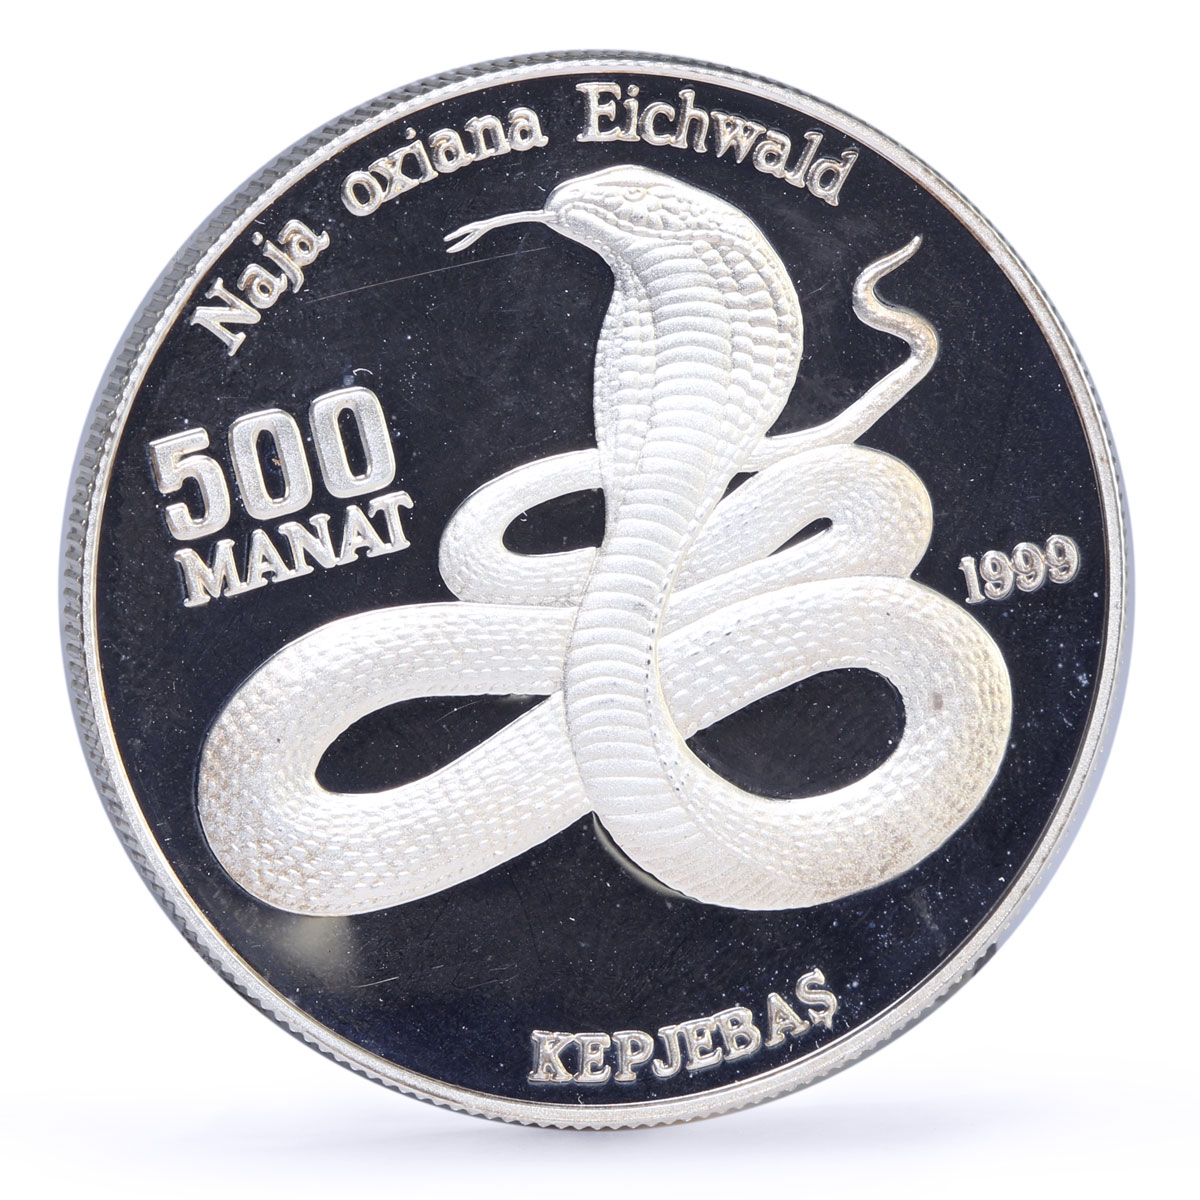 Turkmenistan 500 manat Red Book Wildlife Cobra Snake Fauna silver coin 1999